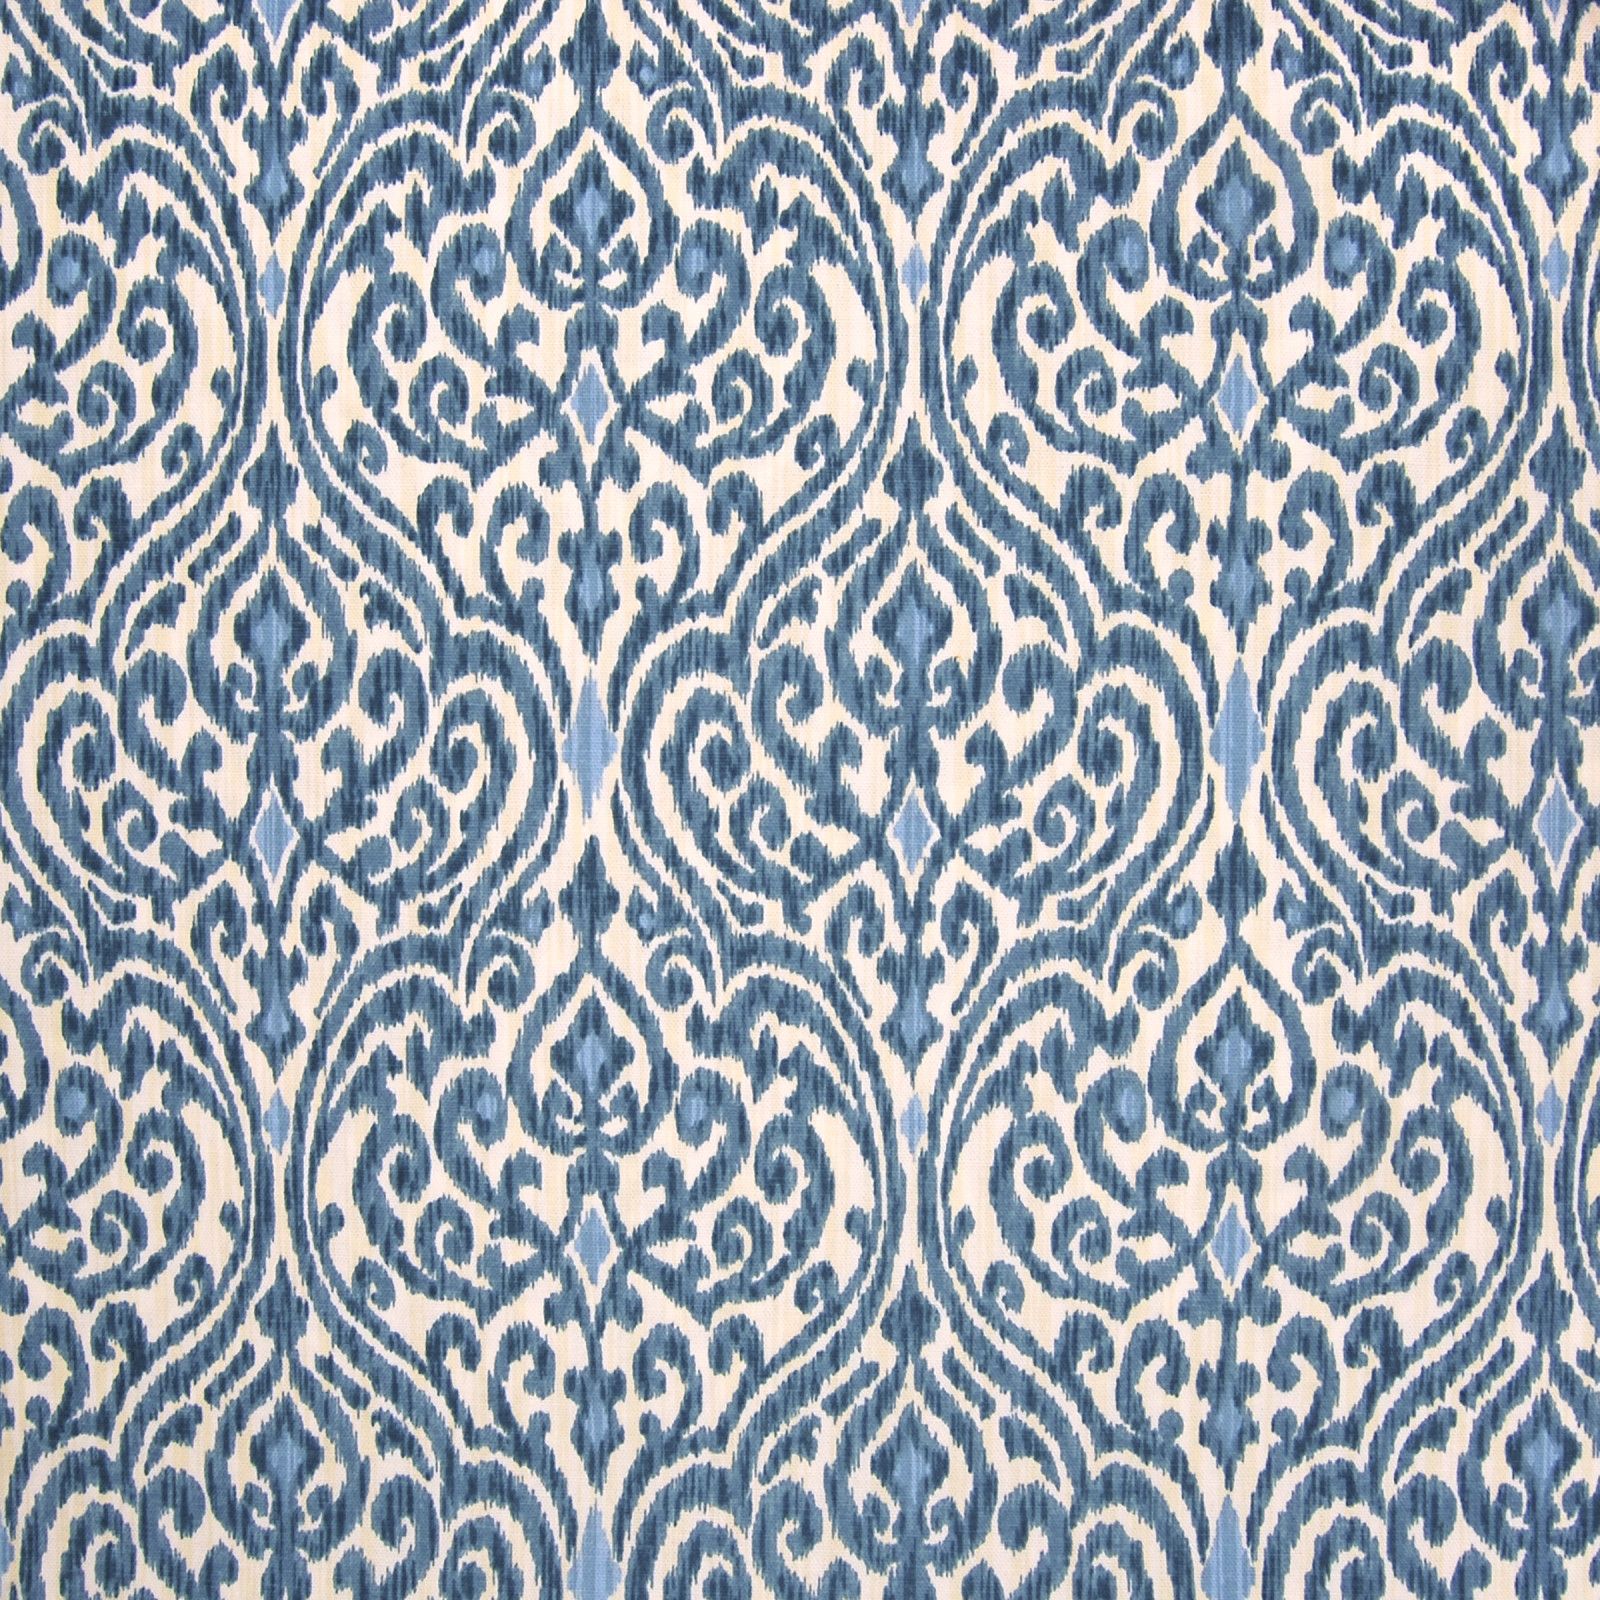 Details about   Drapery Upholstery Fabric Southwestern Ikat Damask 100% Cotton Indigo 